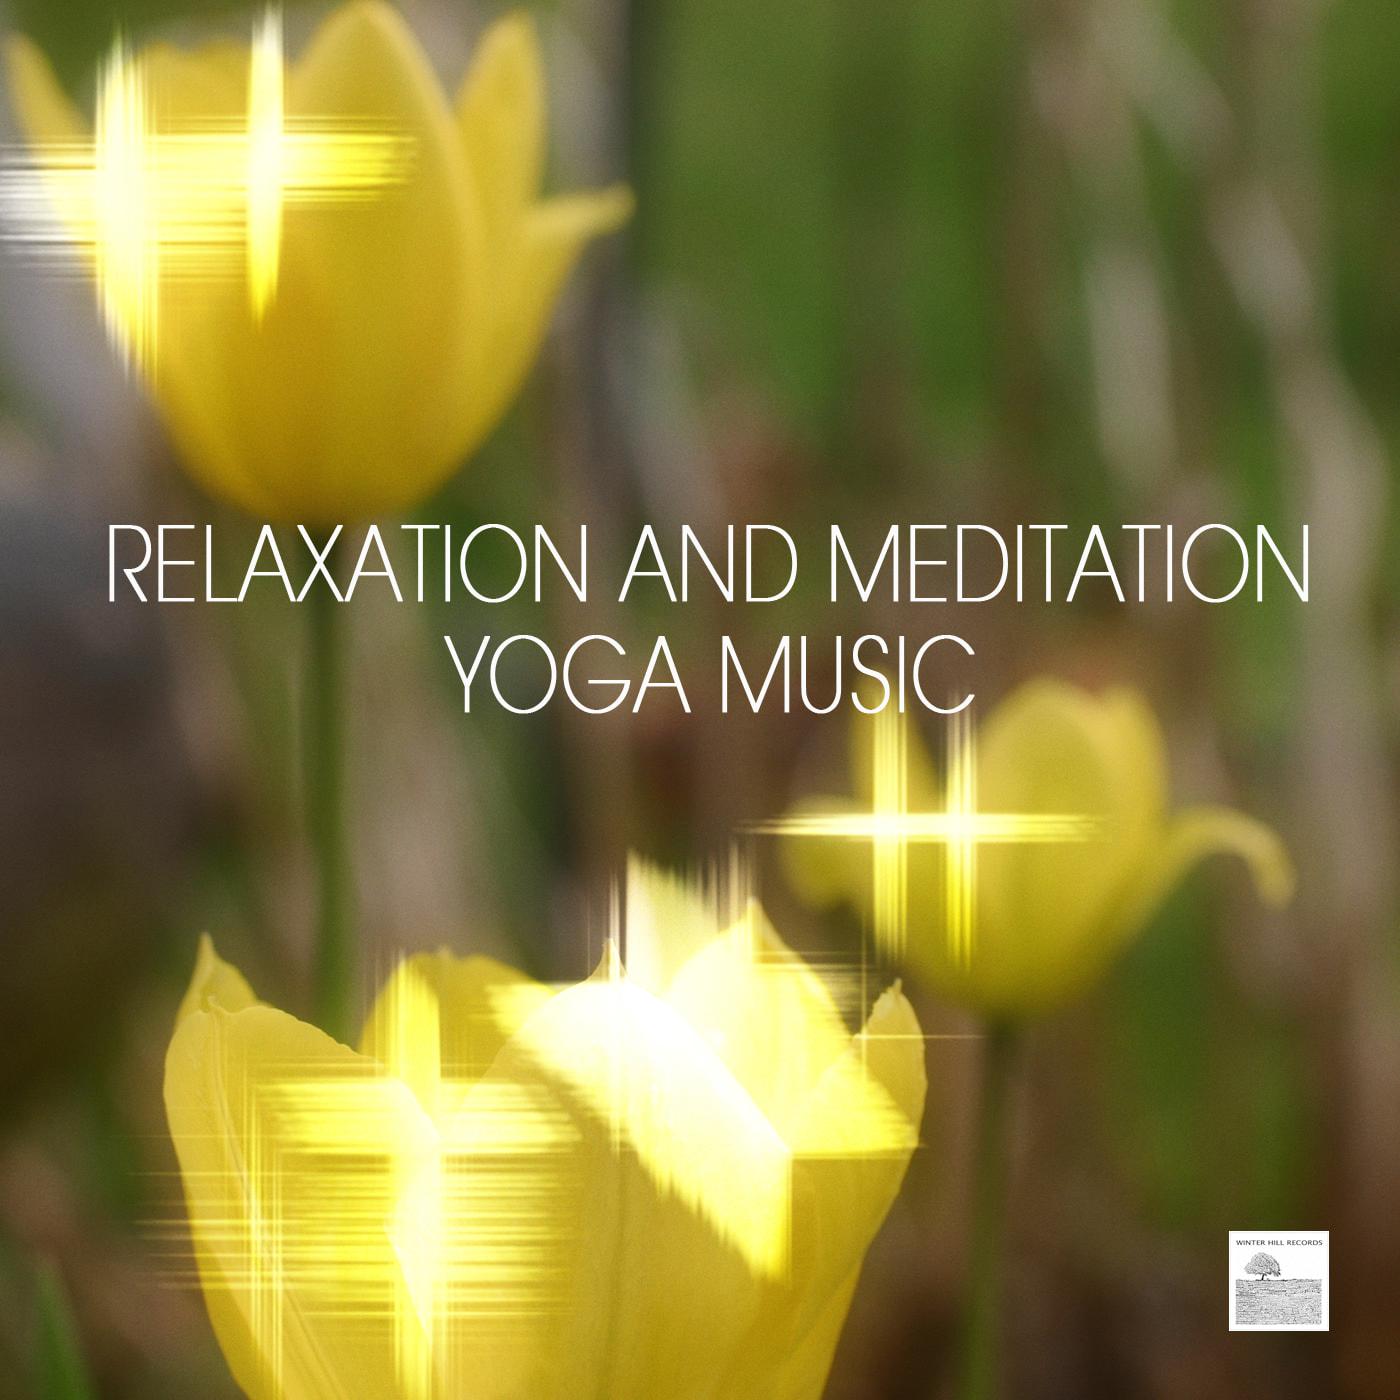 Relaxation Meditation Yoga Music - You Are My Satellite for Yoga Nidra Relaxation